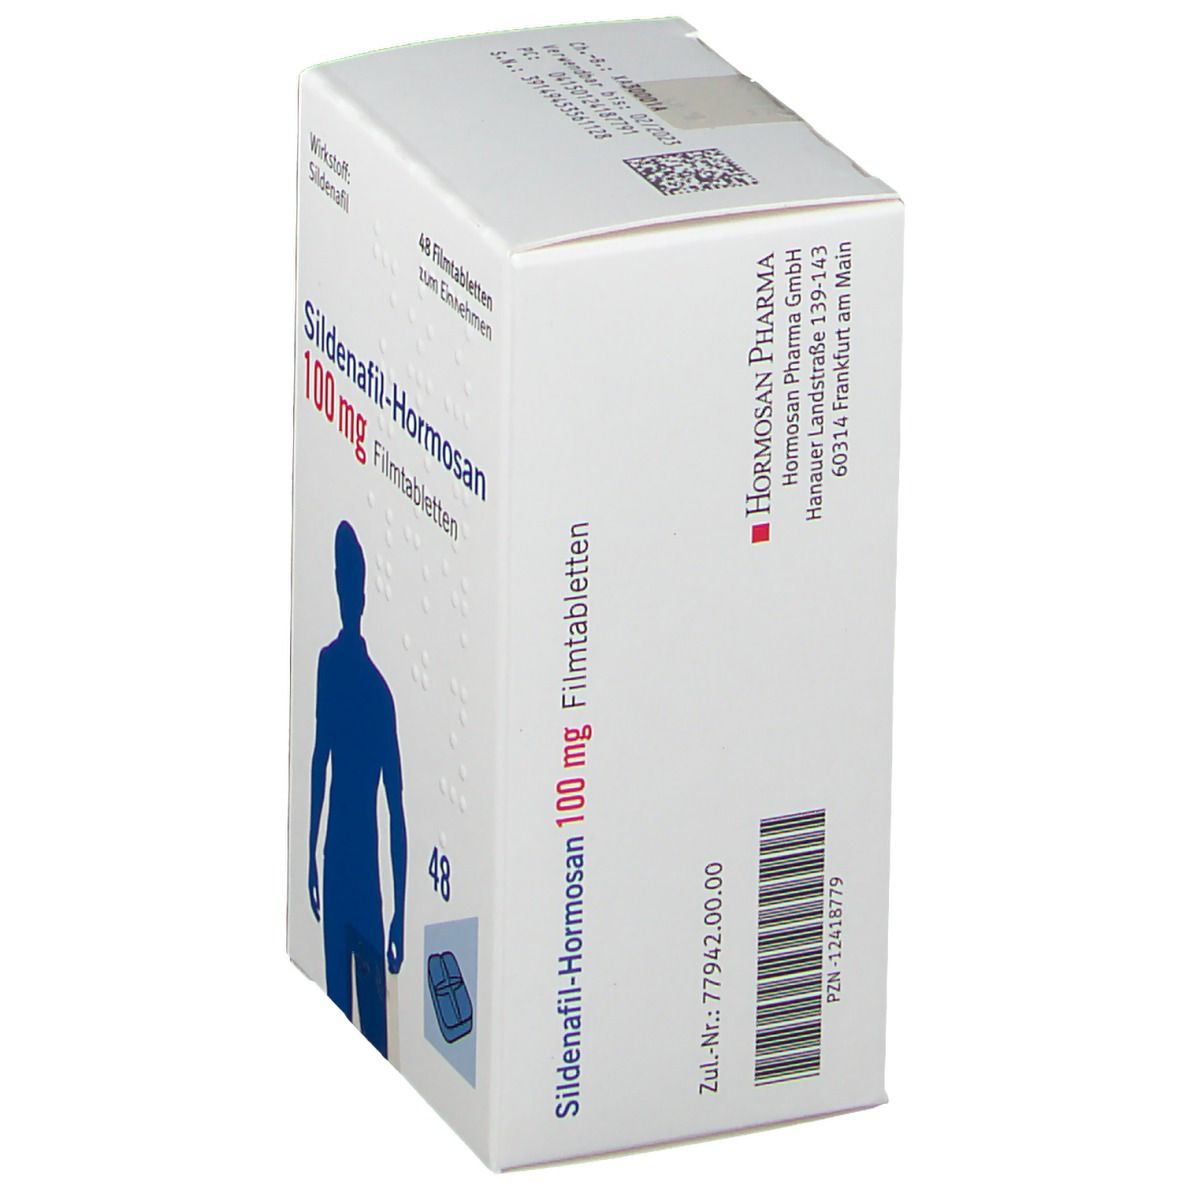 Sildenafil-Hormosan 100 mg